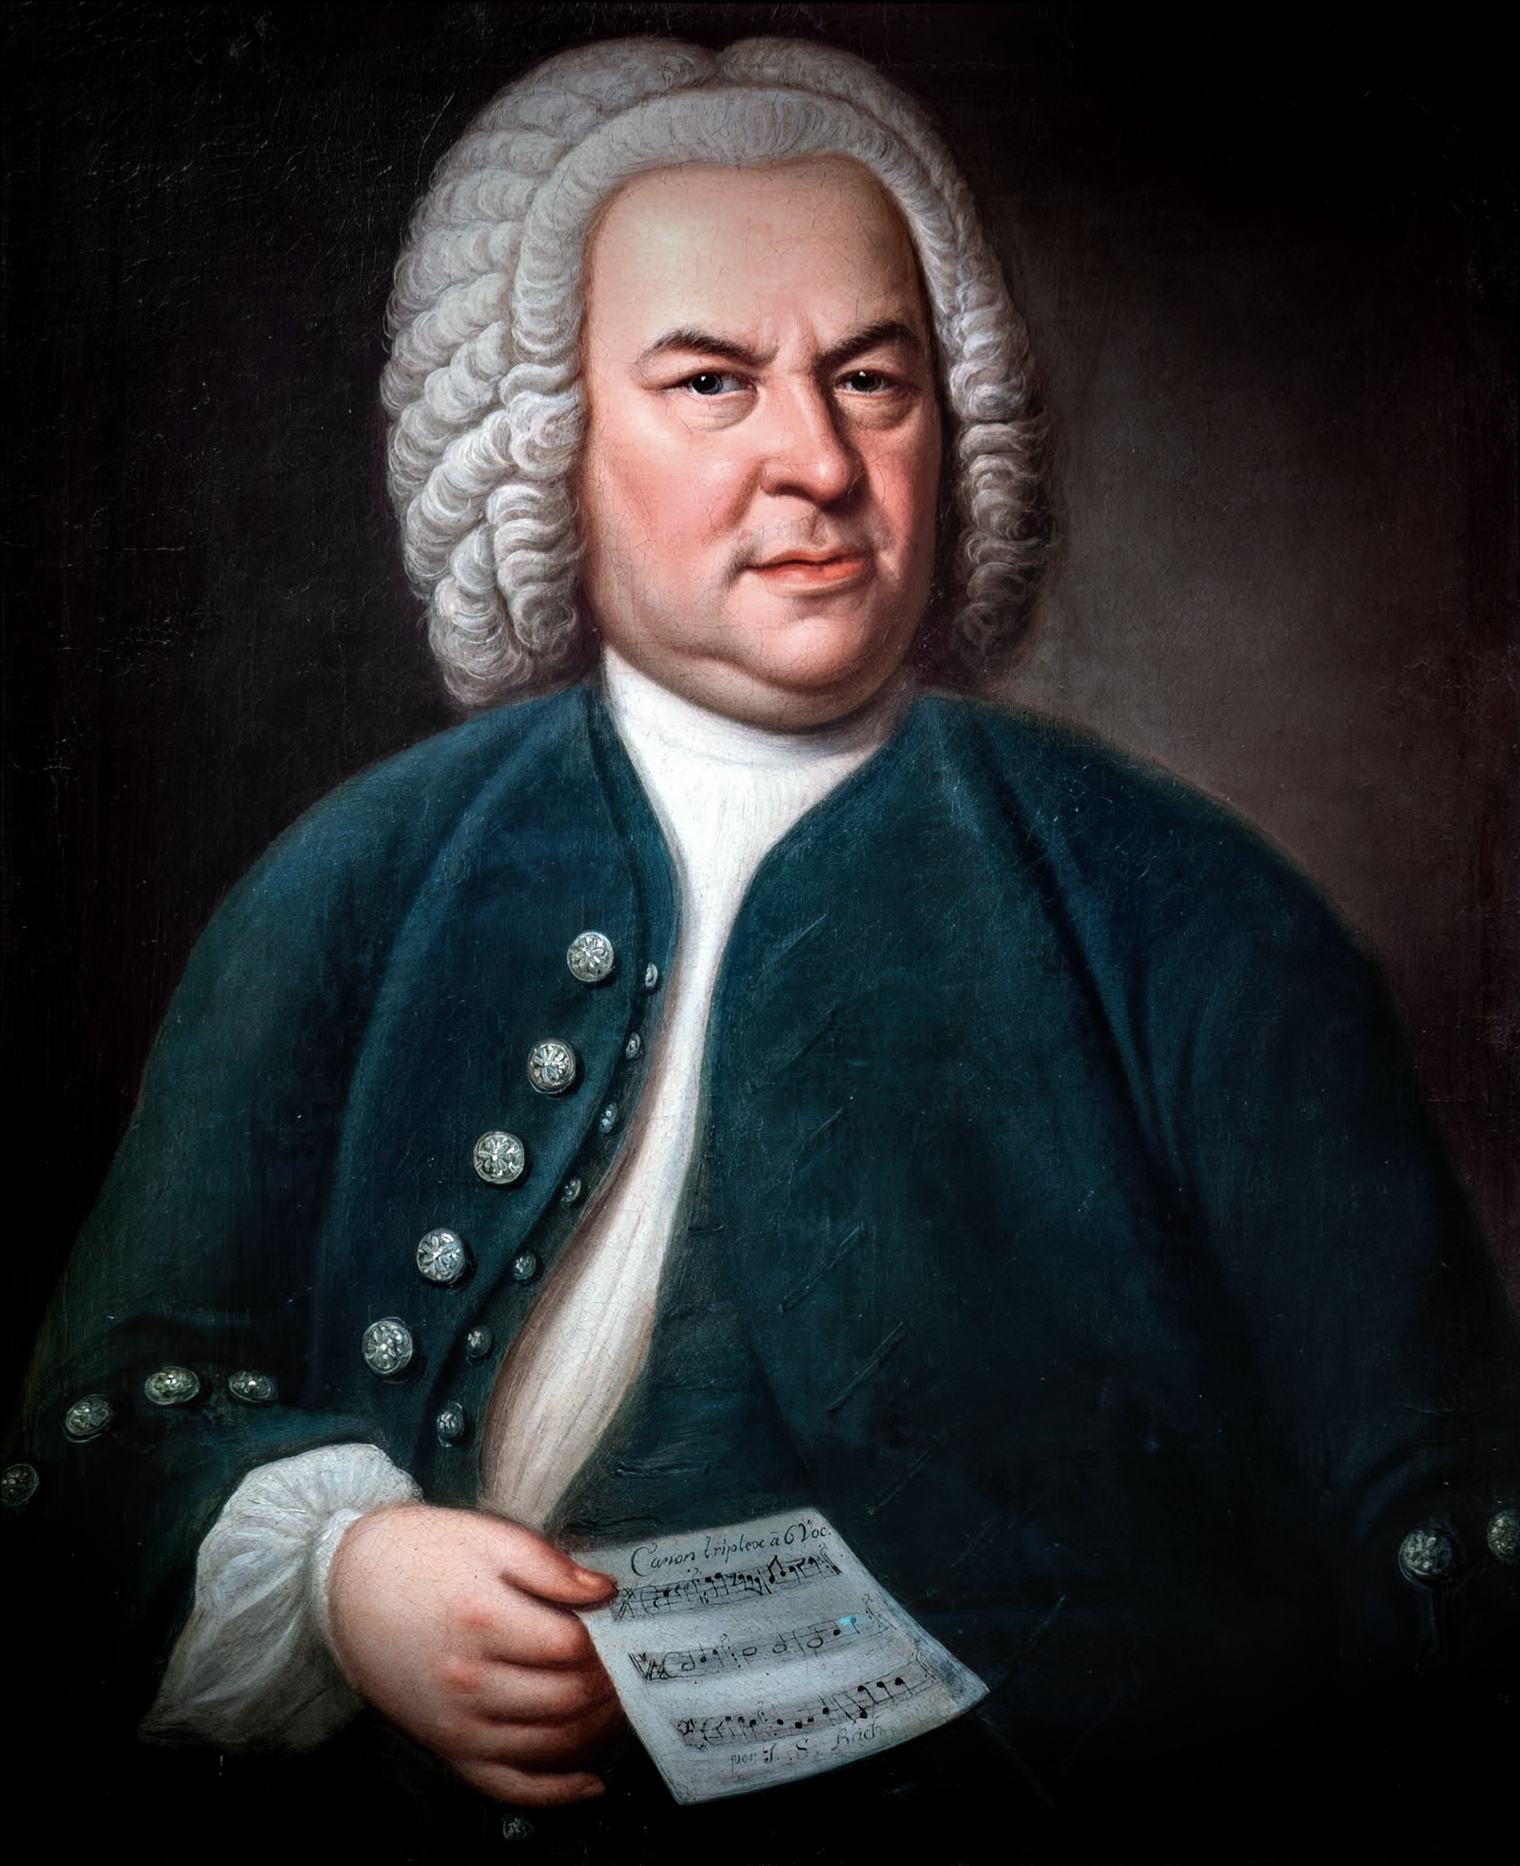 Johann Sebastian Bach | E.G. Haussmann, 1695-1774 | Bach-Archiv Leipzig